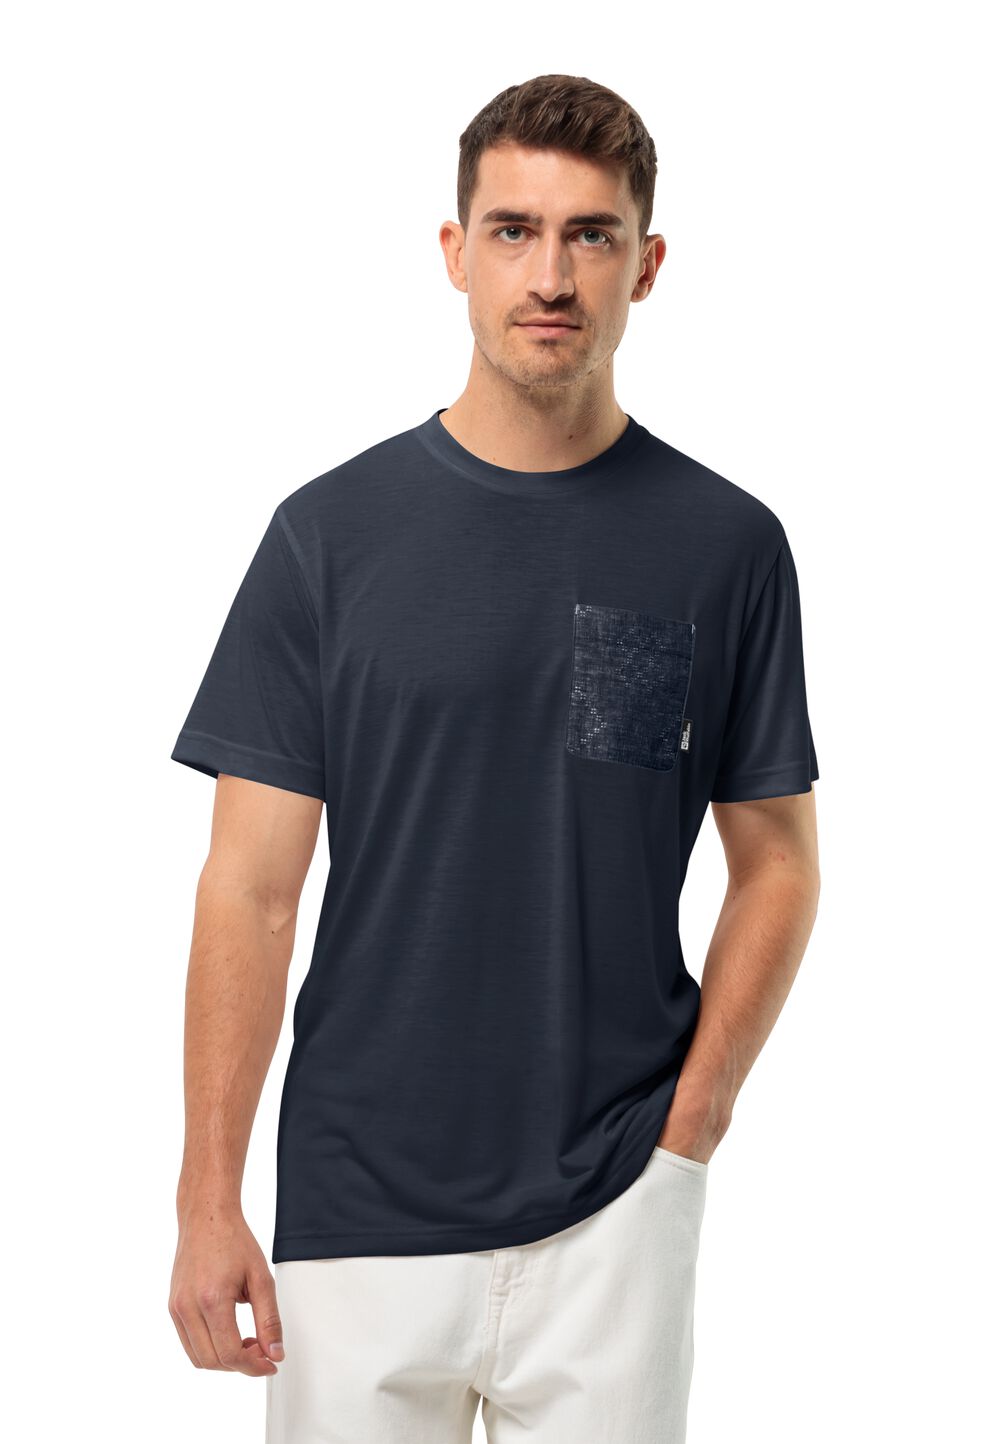 Jack Wolfskin Pocket Karana T-Shirt Men Functioneel shirt Heren M blue night blue